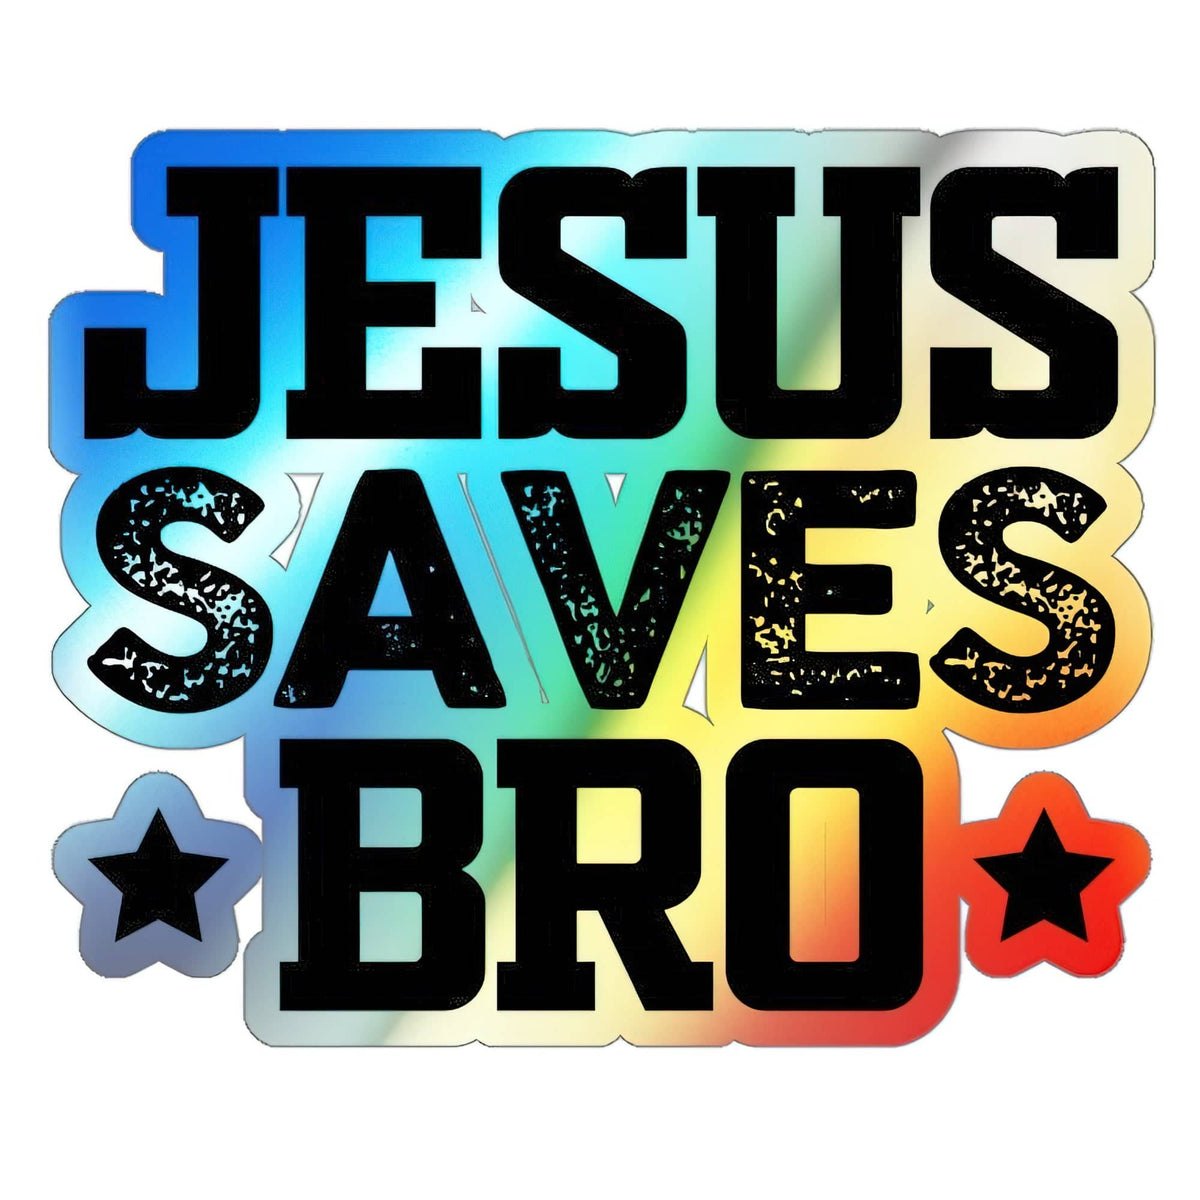 Holographic Die-cut Stickers &quot;Jesus Saves Bro&quot;